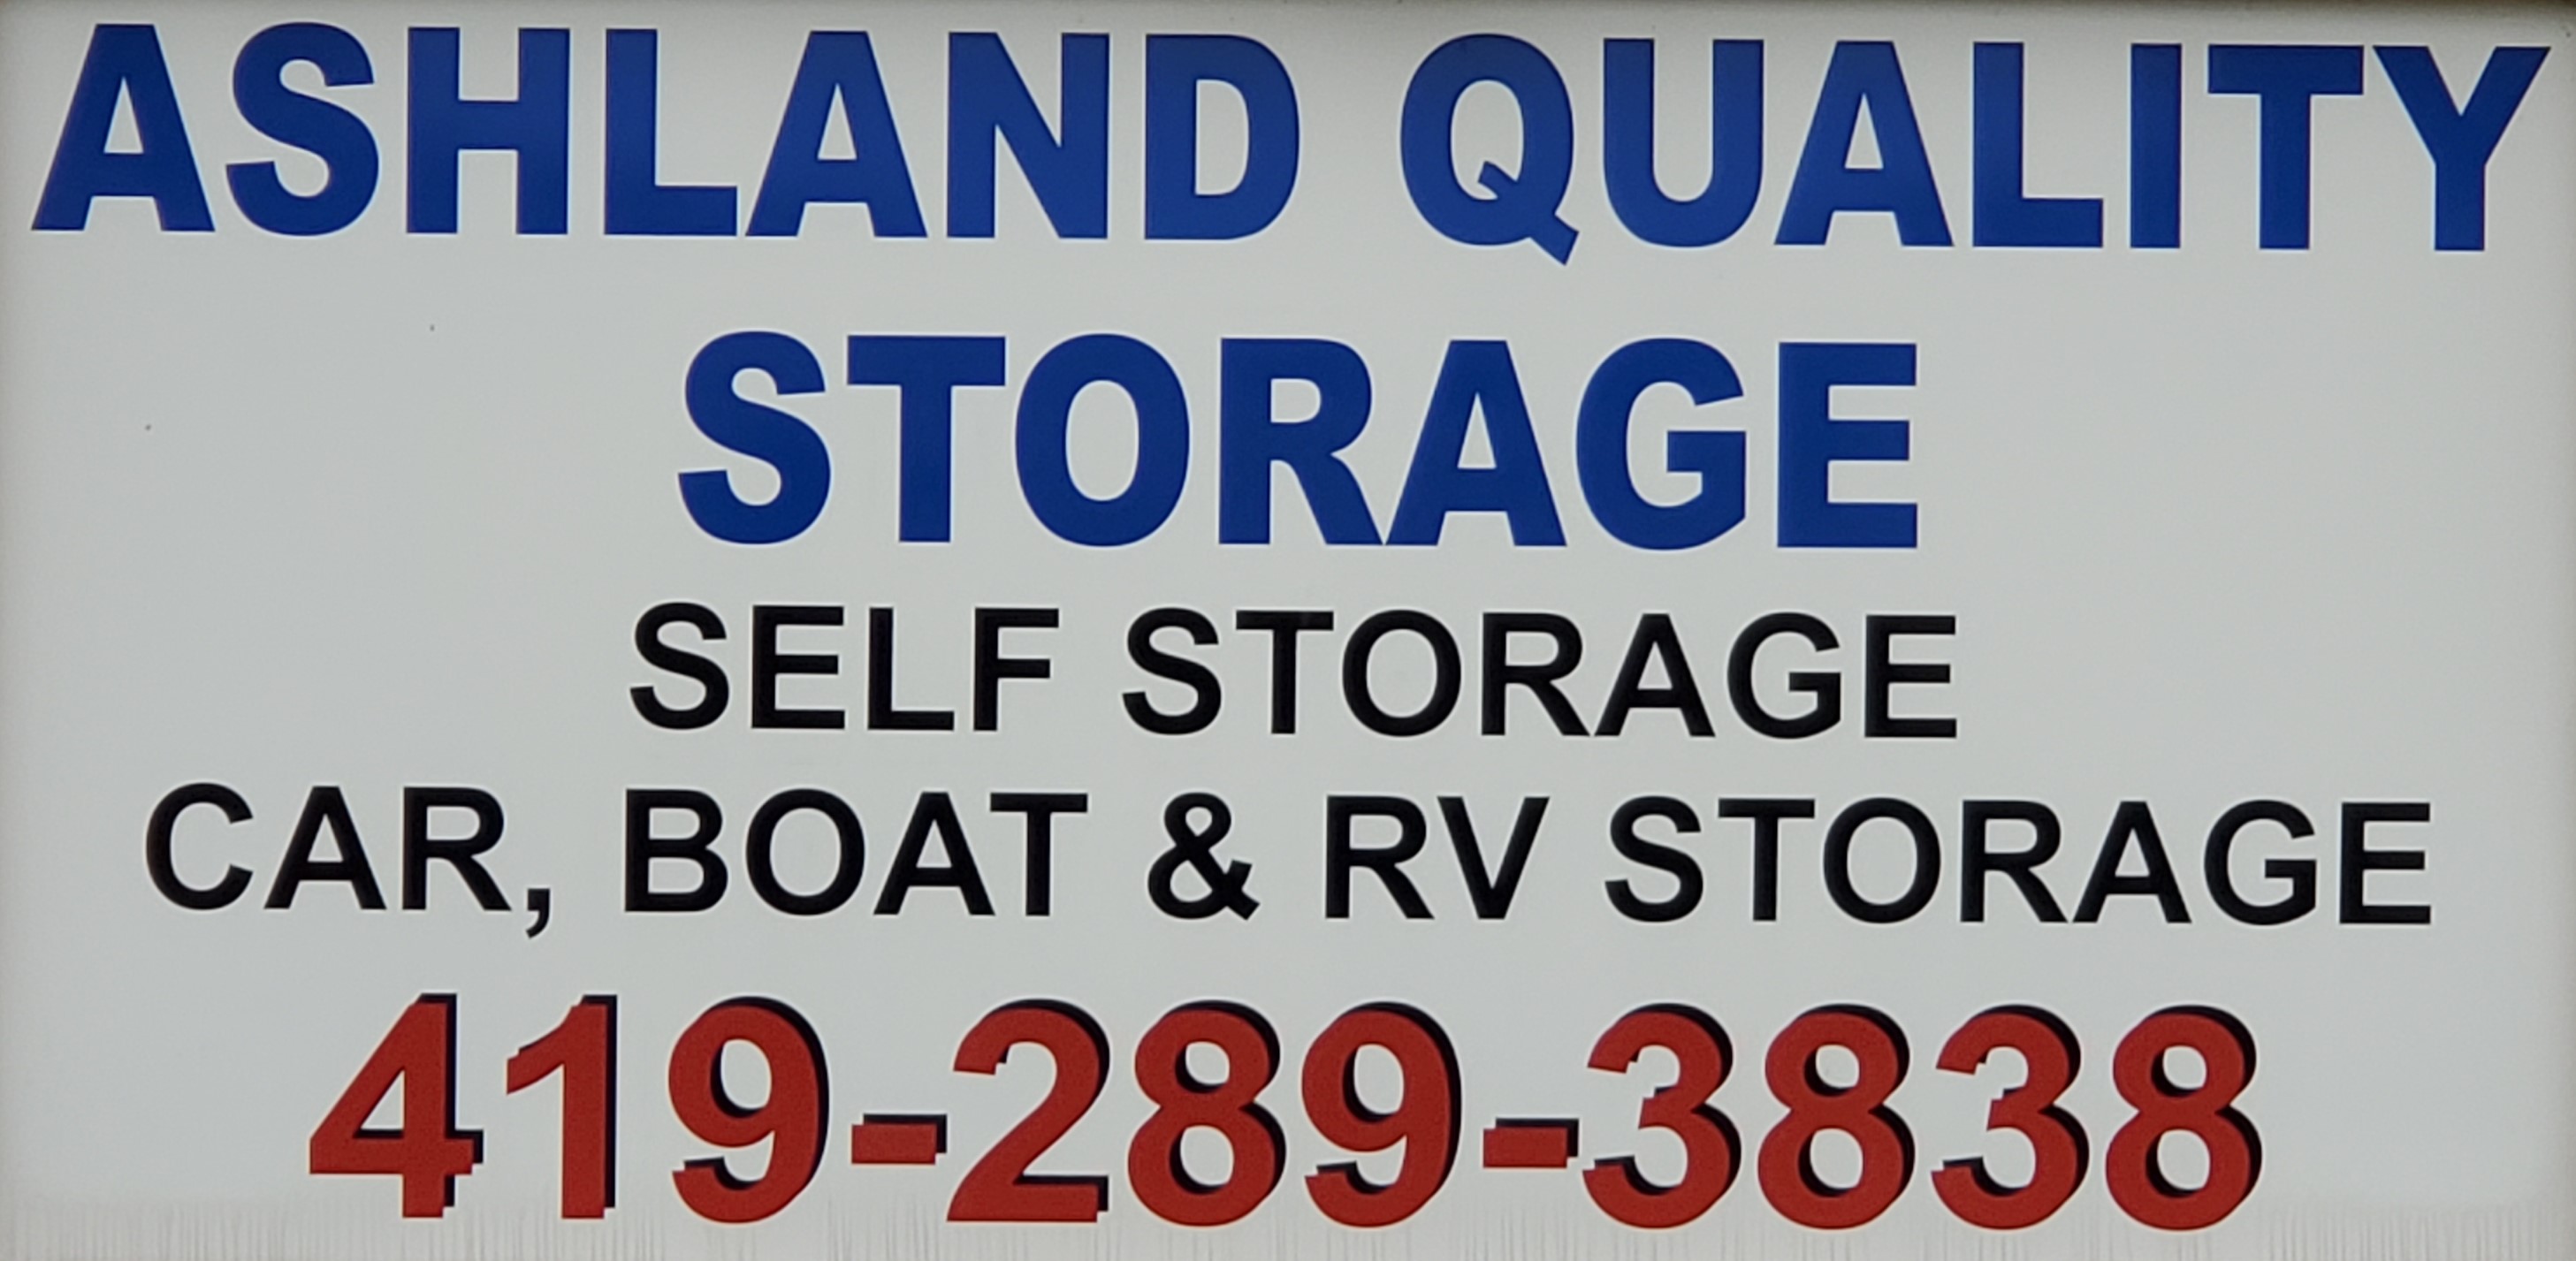 Ashland Quality Storage in Ashland, OH